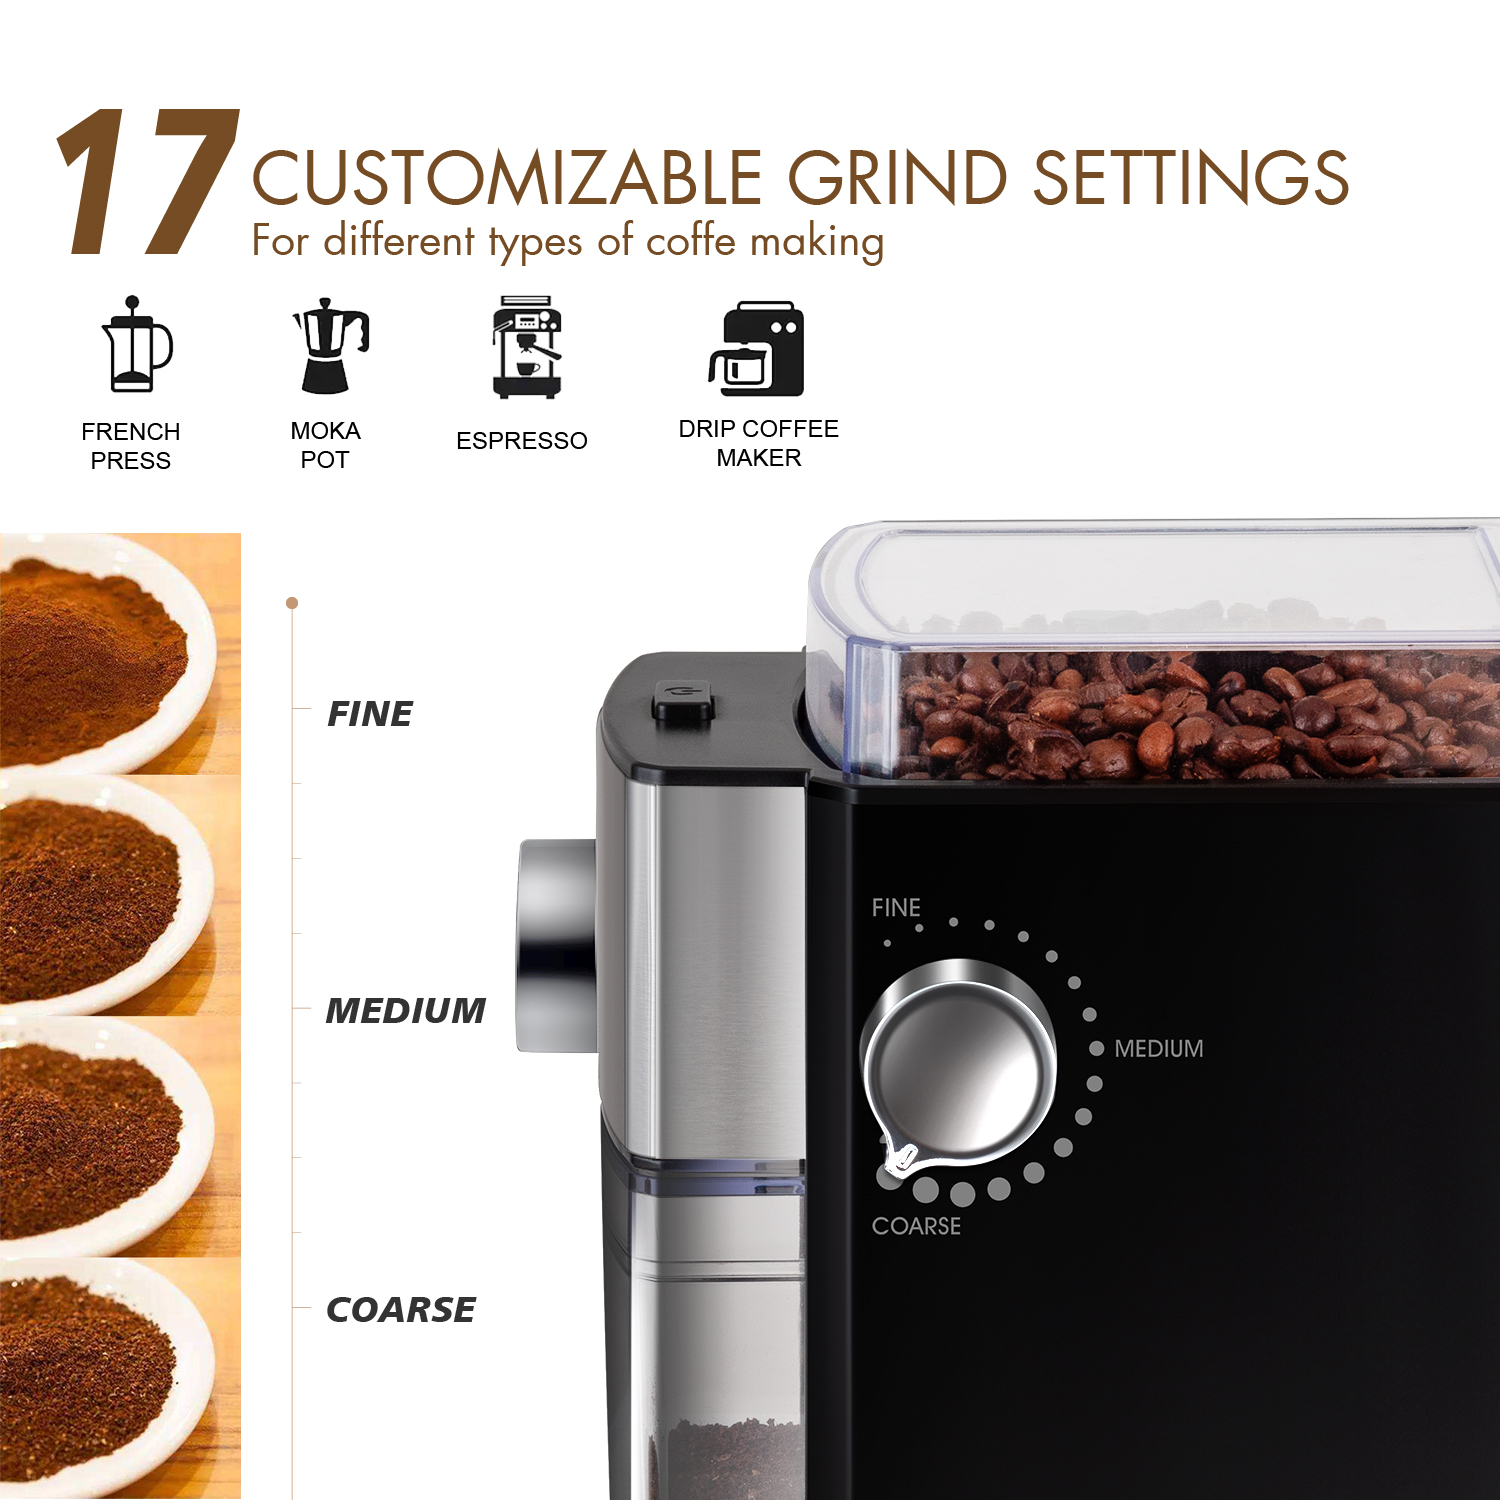 Burr Coffee Grinder, Electric Coffee Bean Grinder withLarge Bean Hopper, 2-12cups Selectors 17 Grinding Settings